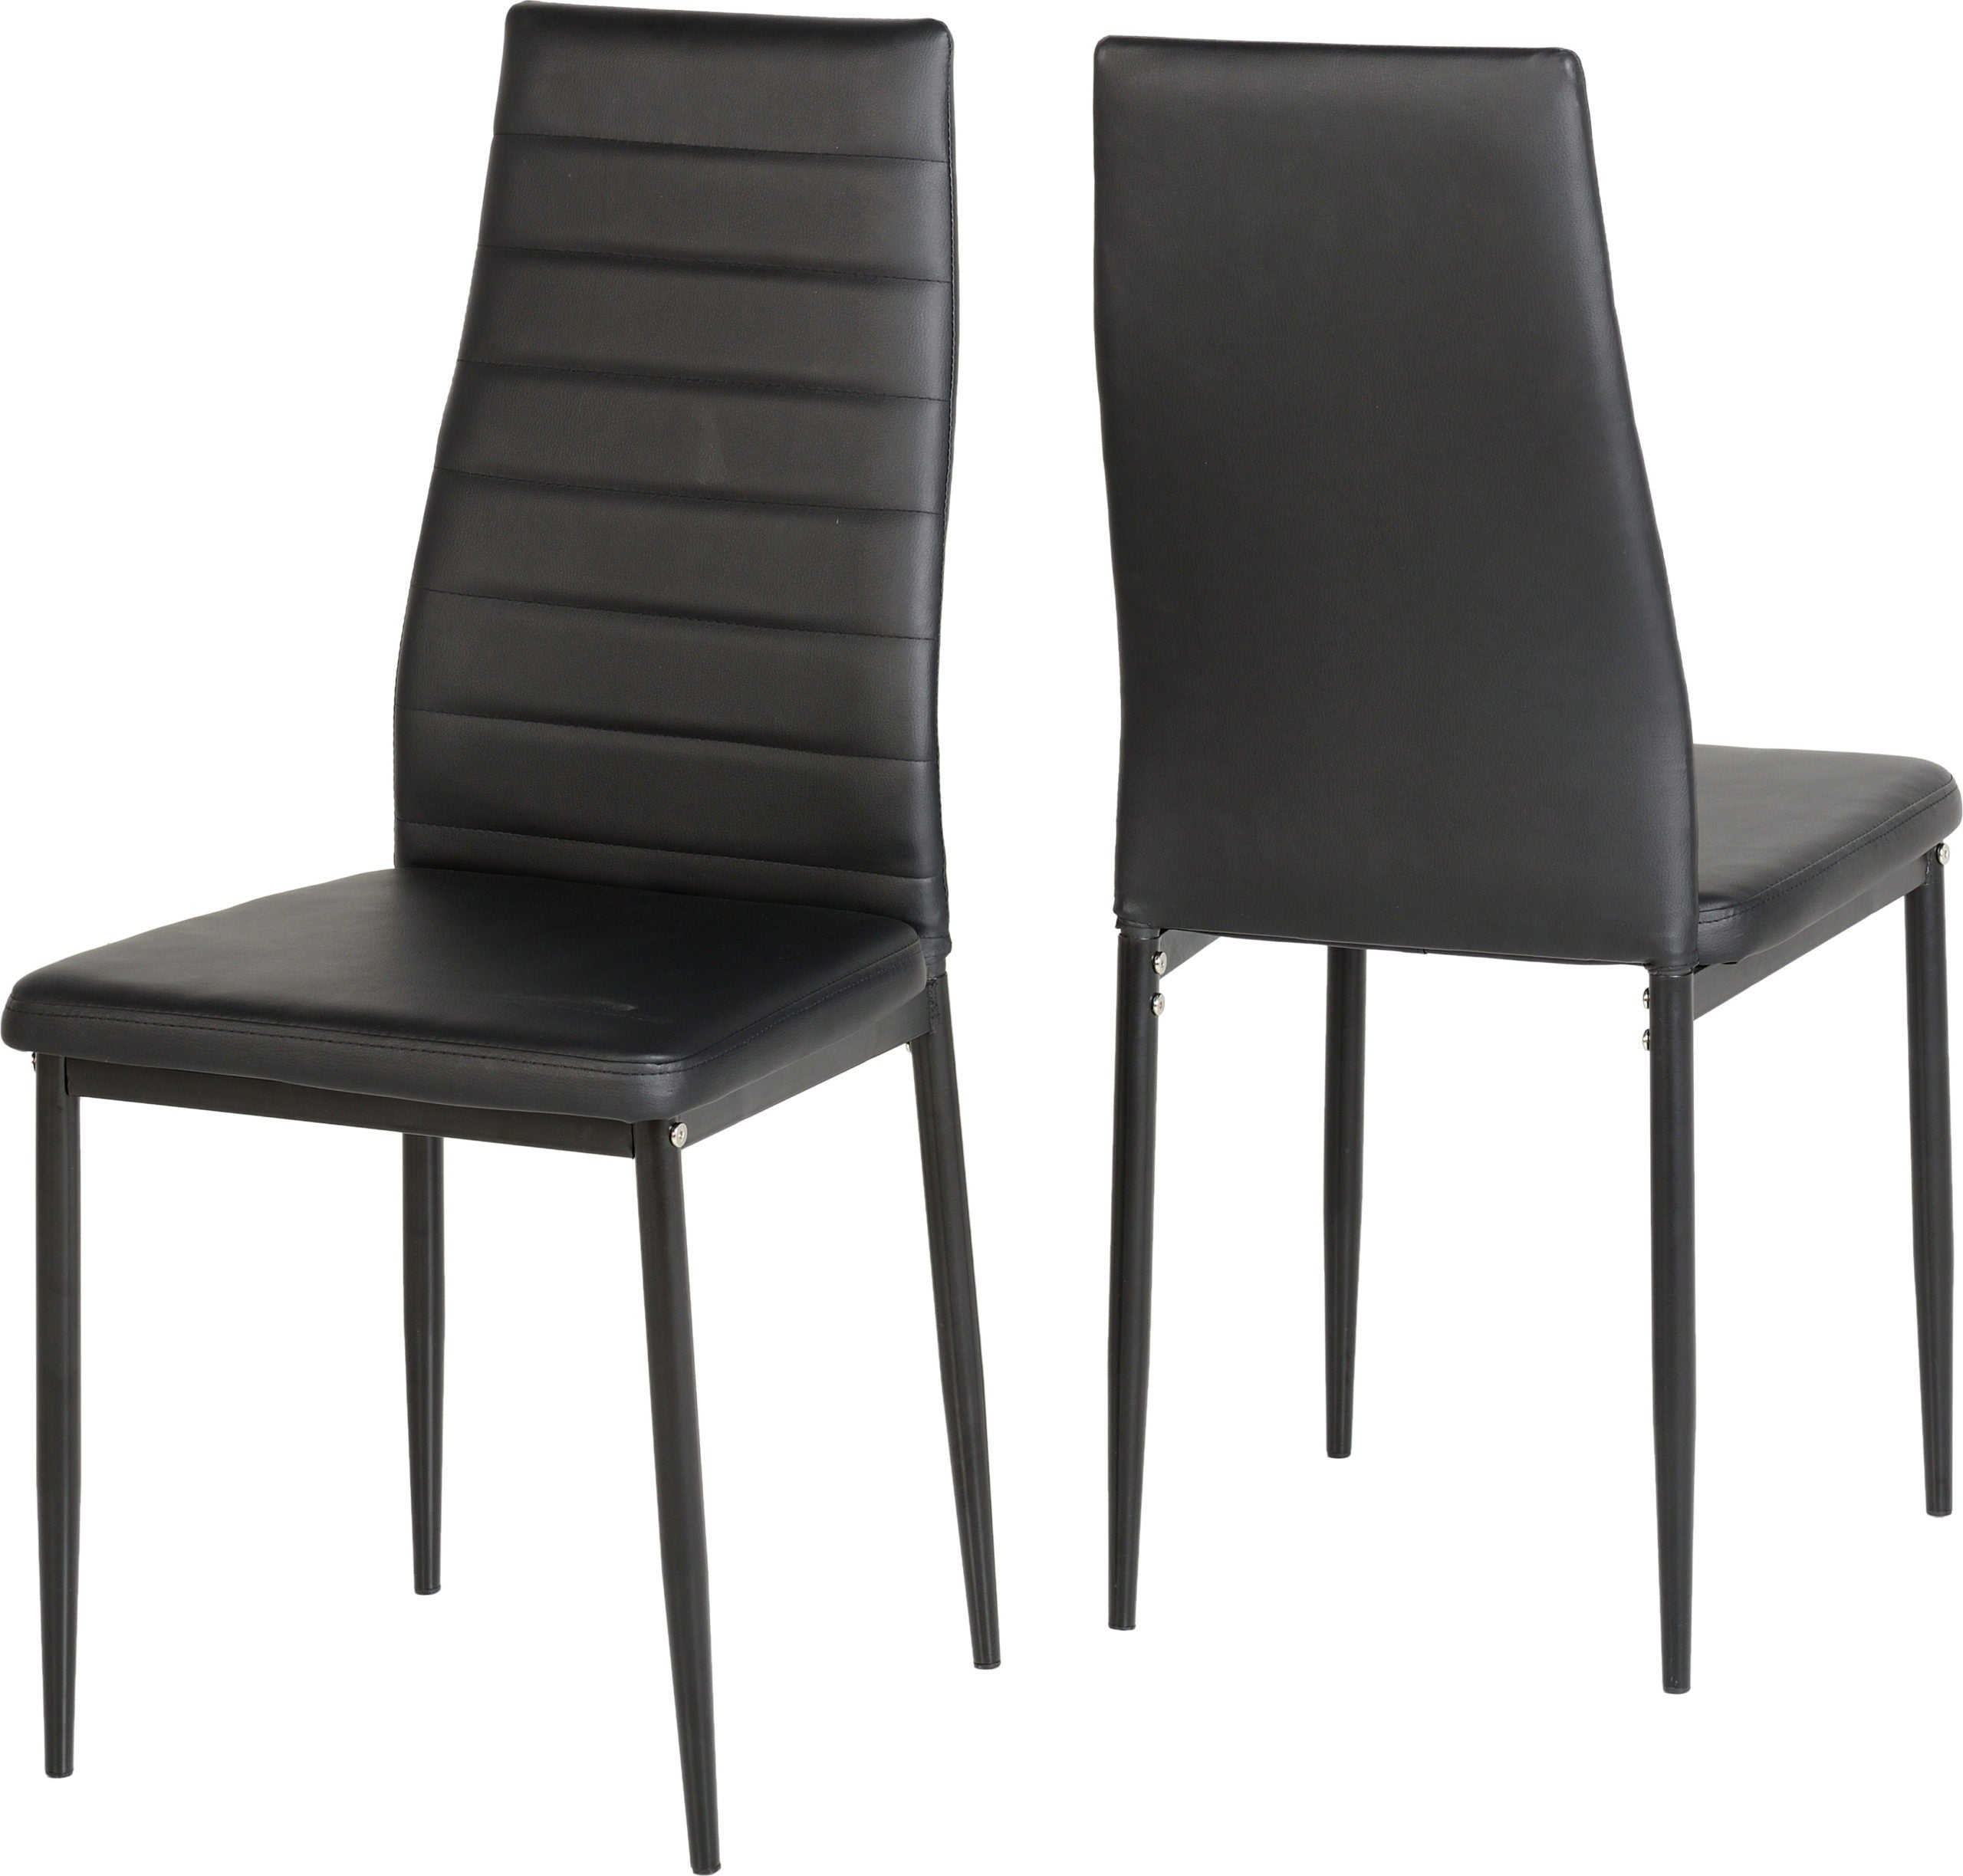 Abbey Chair Black Faux Leather x2